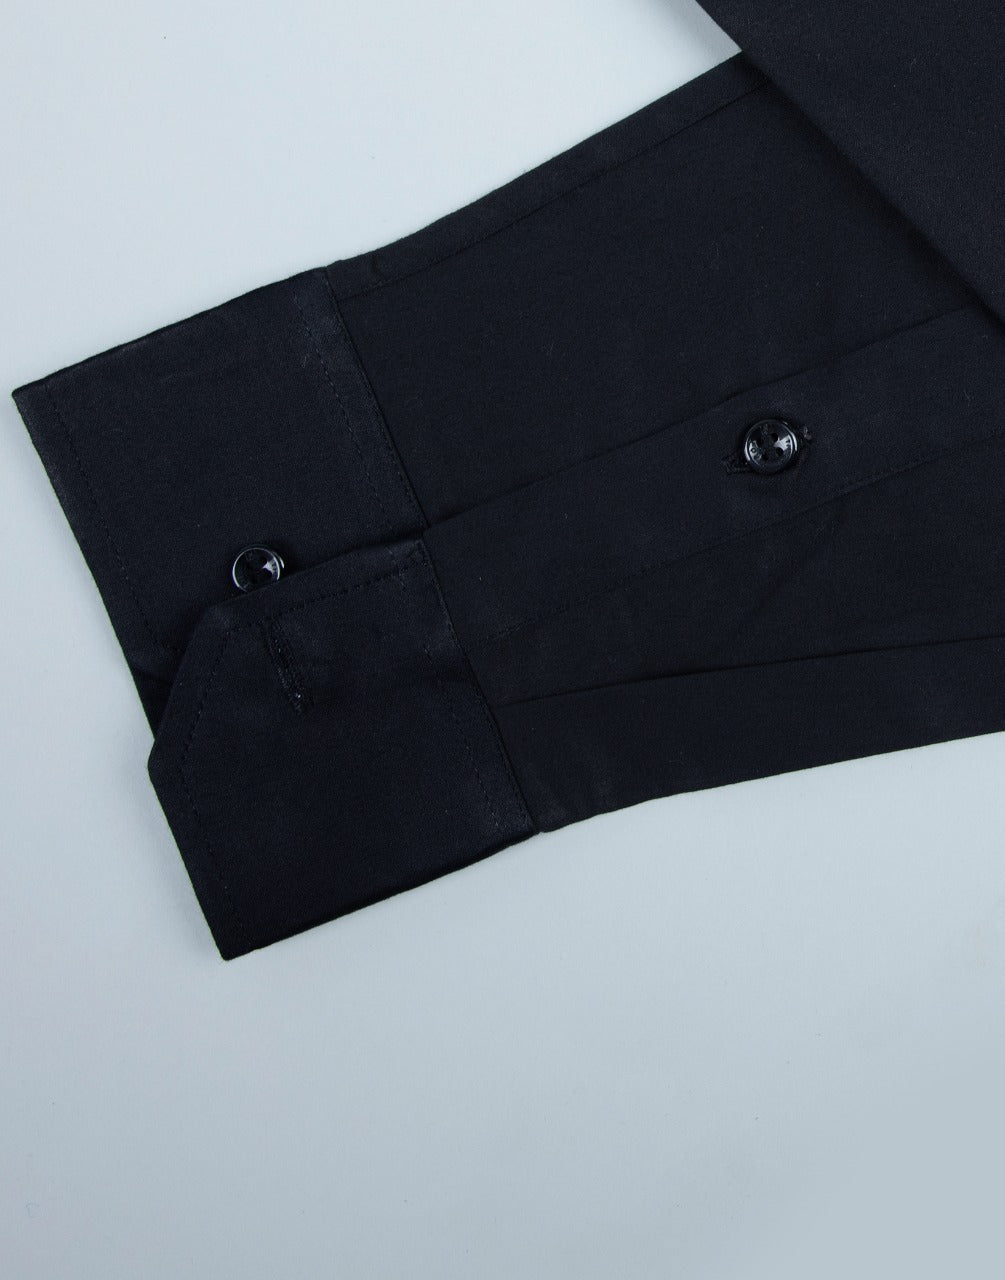 Black color plain formal shirt